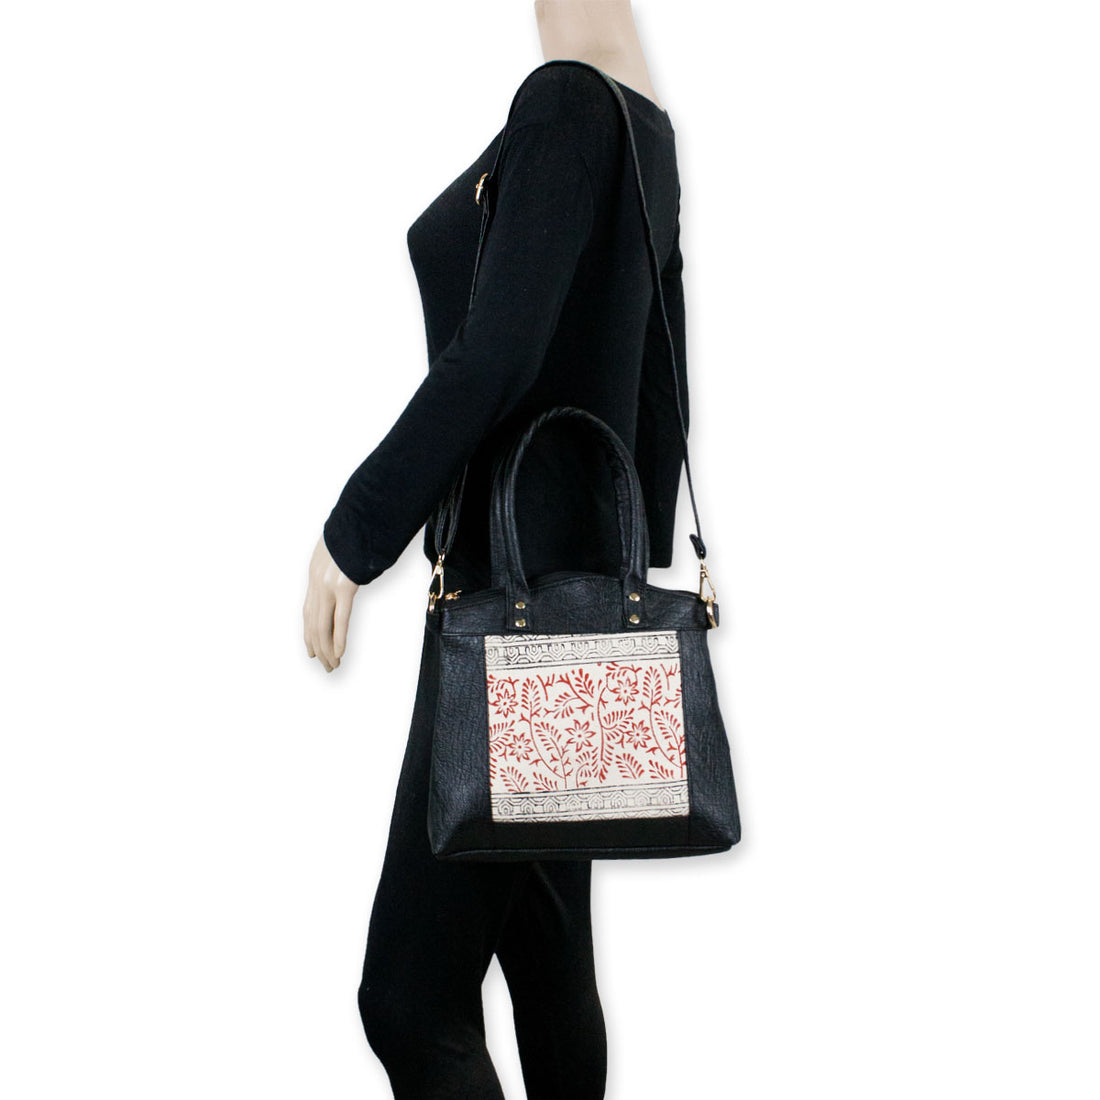 Block-Printed Garden Handbag with Sling